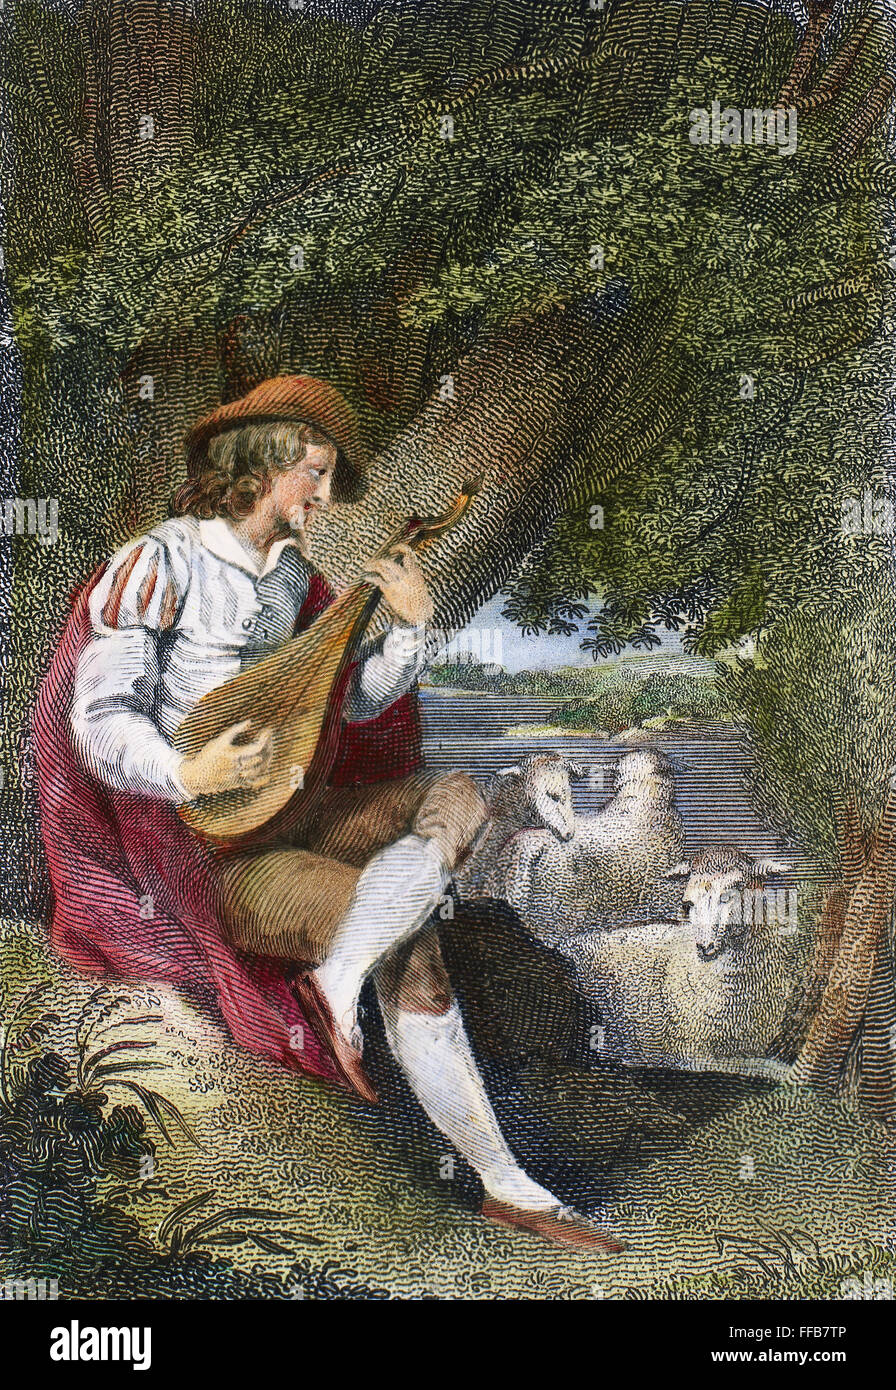 SHEPHERD, c1800. /nEtching and engraving, English, c1800, after Thomas Kirk (c1765-1797). Stock Photo